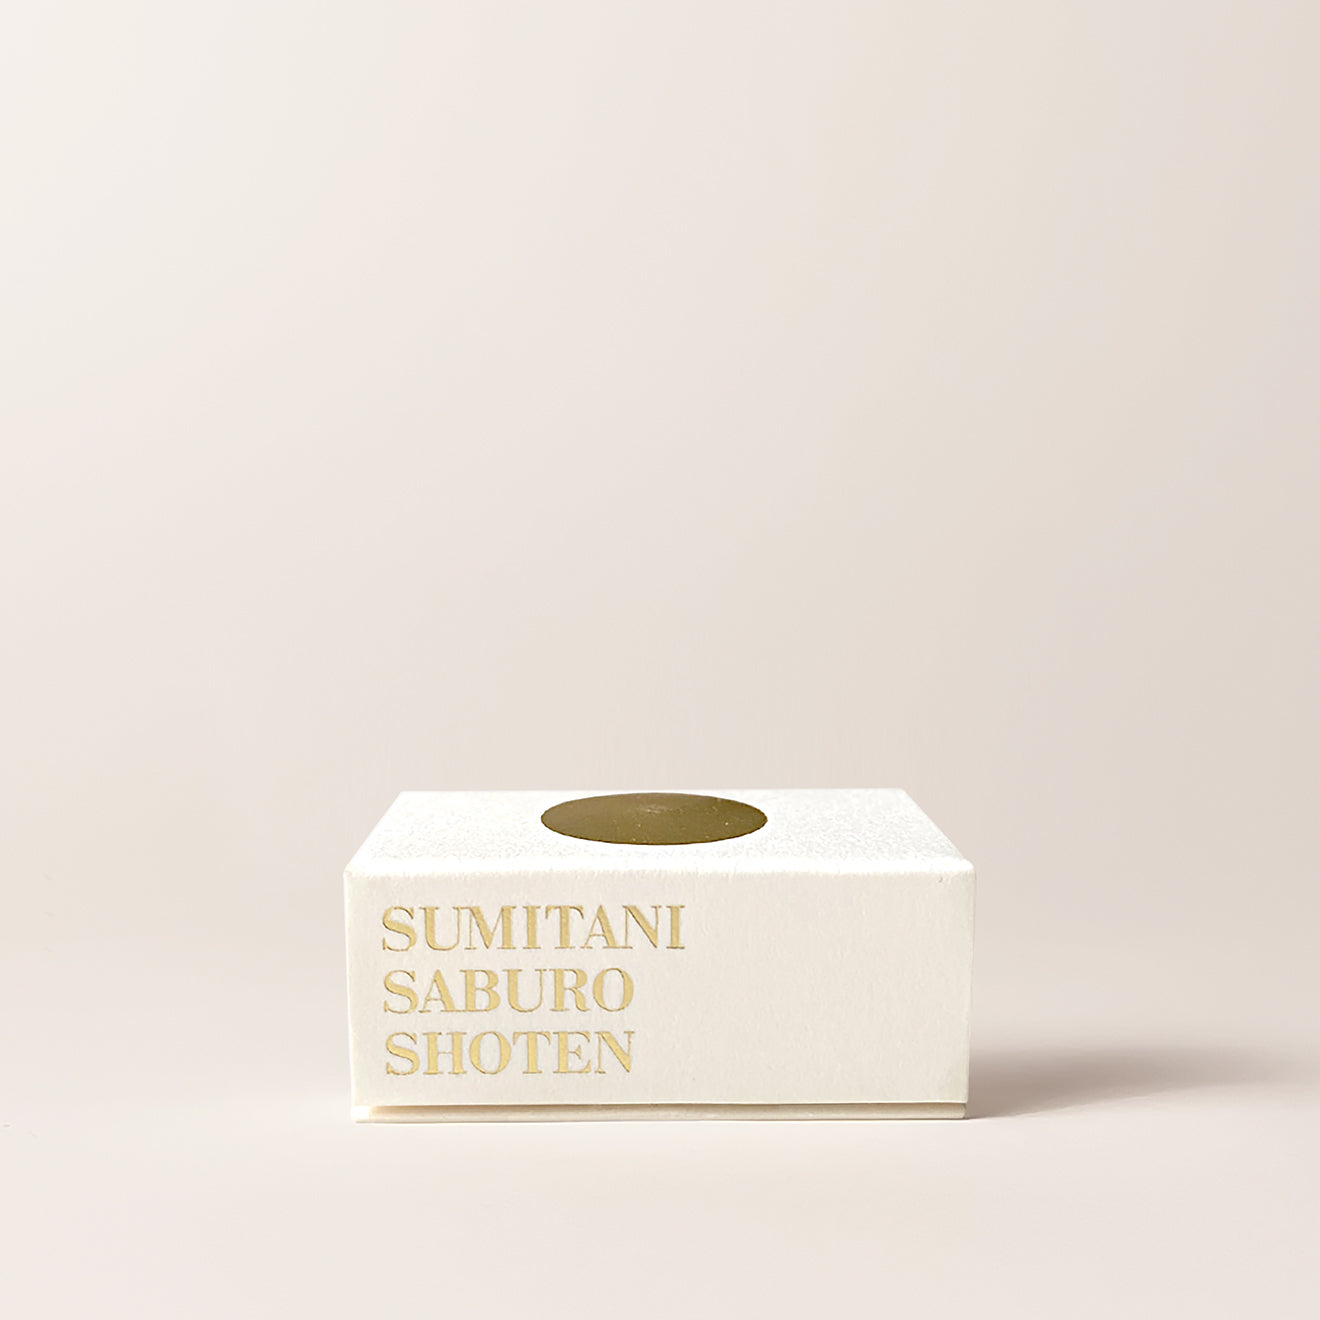 Sumitani Saburo Shoten / Solid Brass Ball Shaped Incense Holder